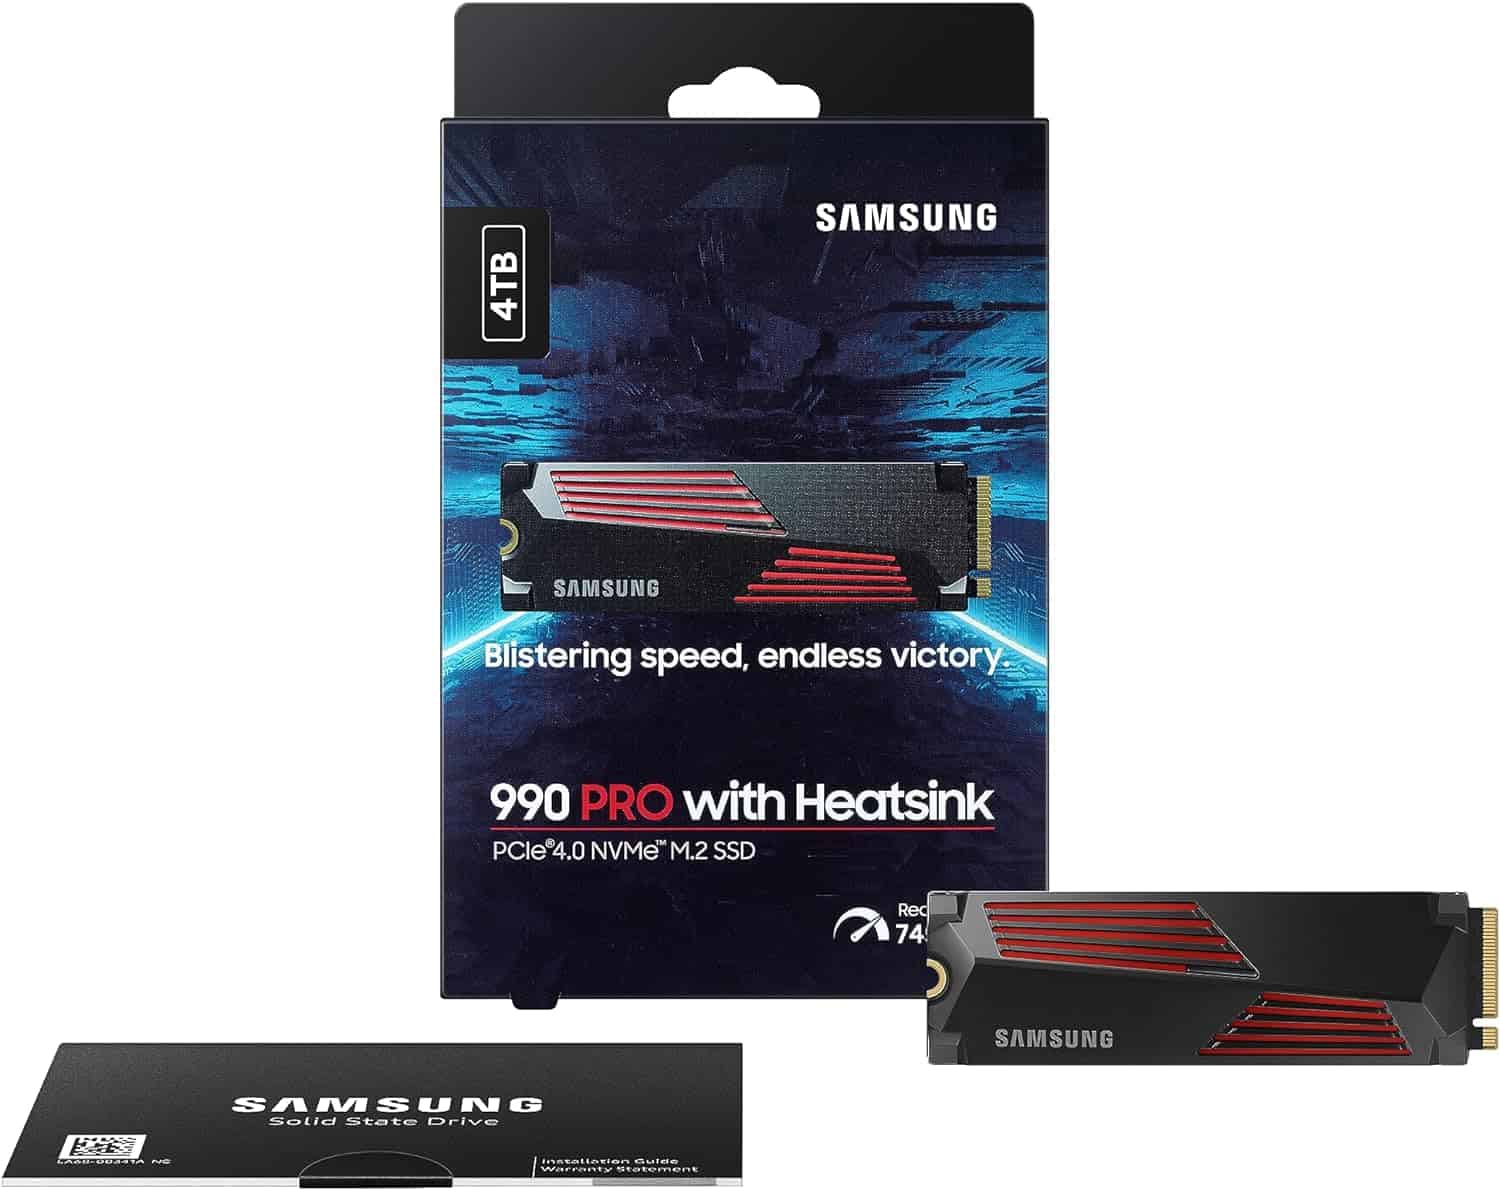 Samsung 990 Pro with Heatsink 4tb retail